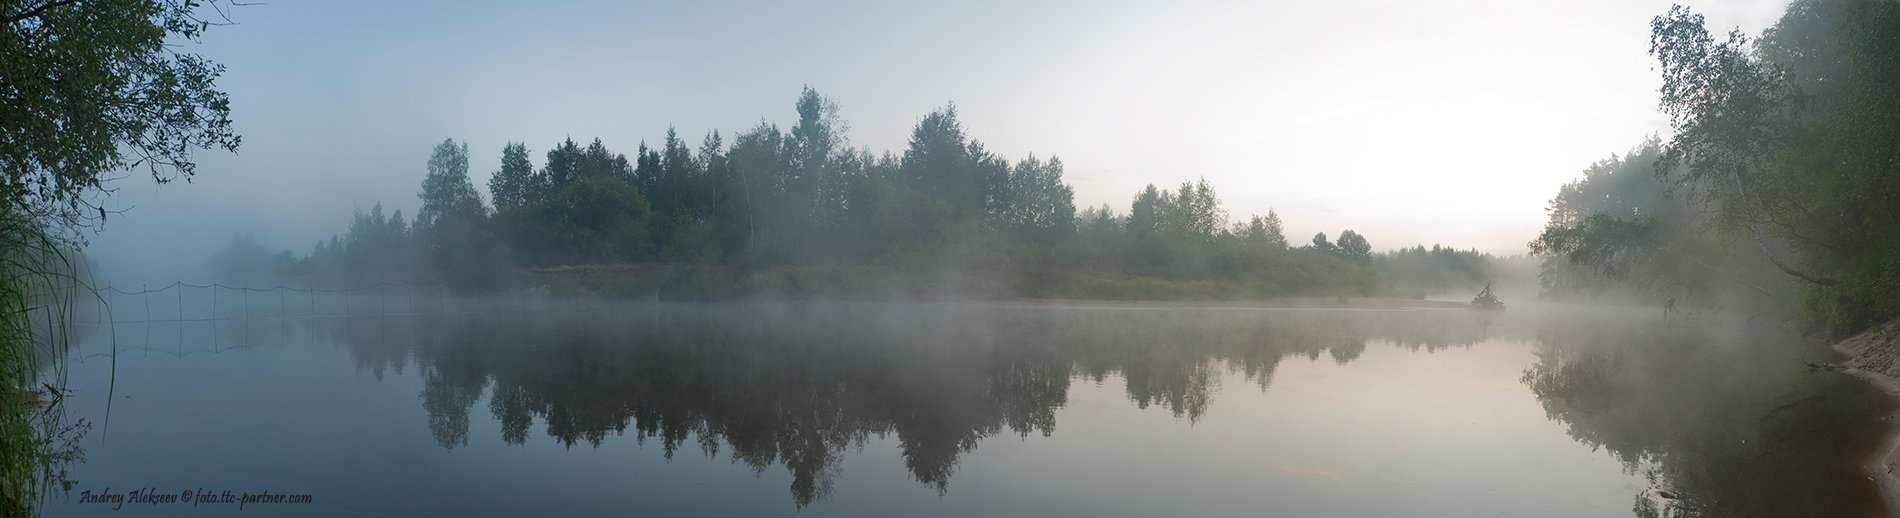 лето, рассвет, река, туман, лес, Андрей Алексеев